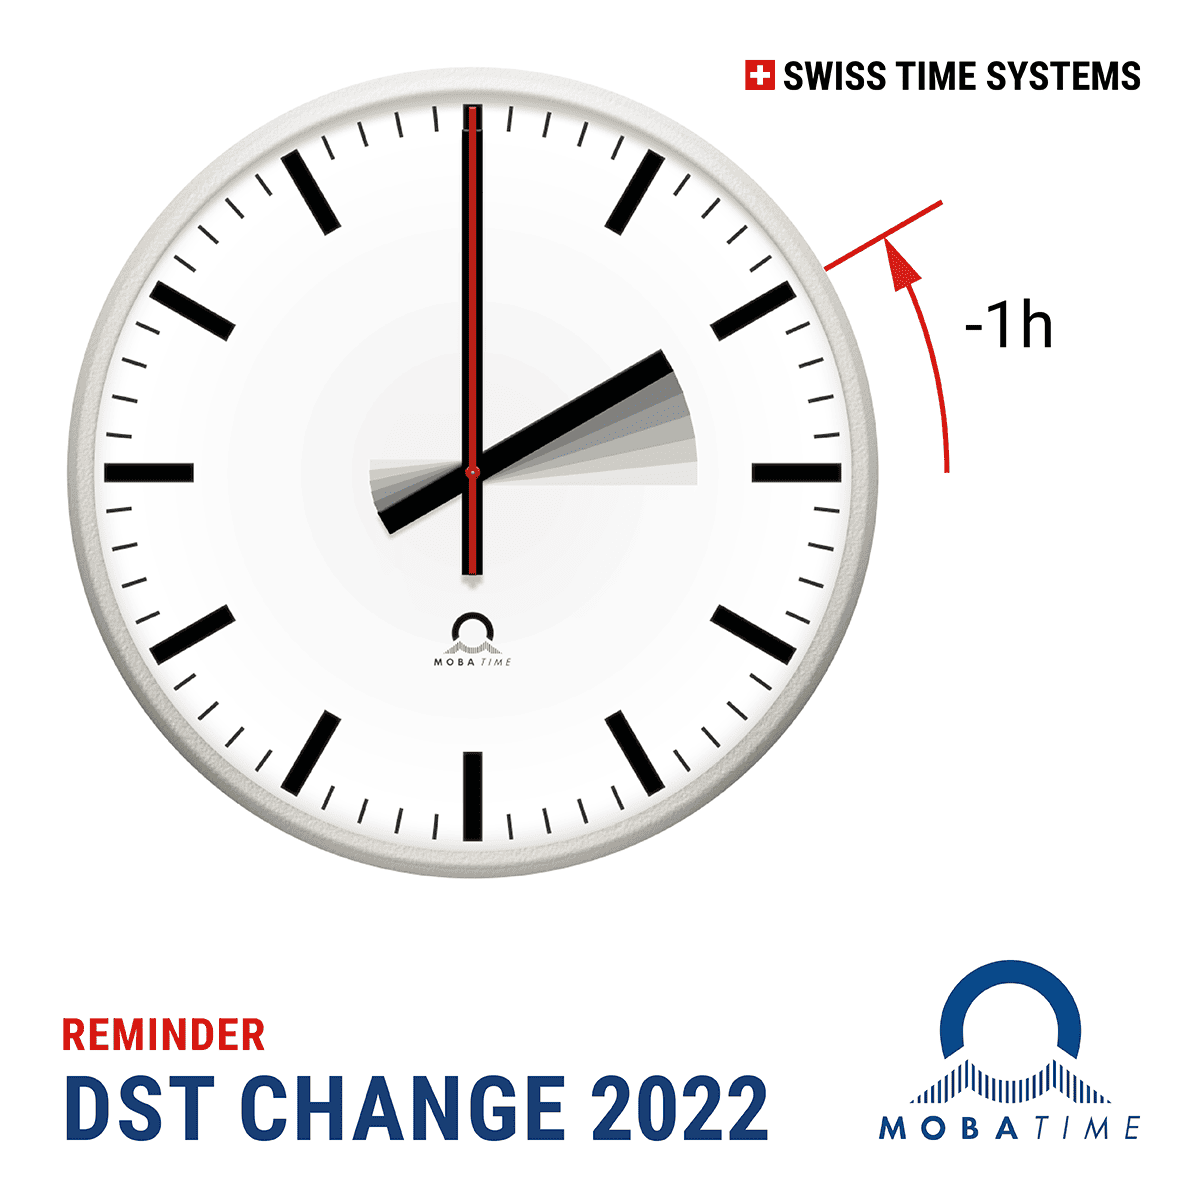 Daylight Saving Time 2022 ends